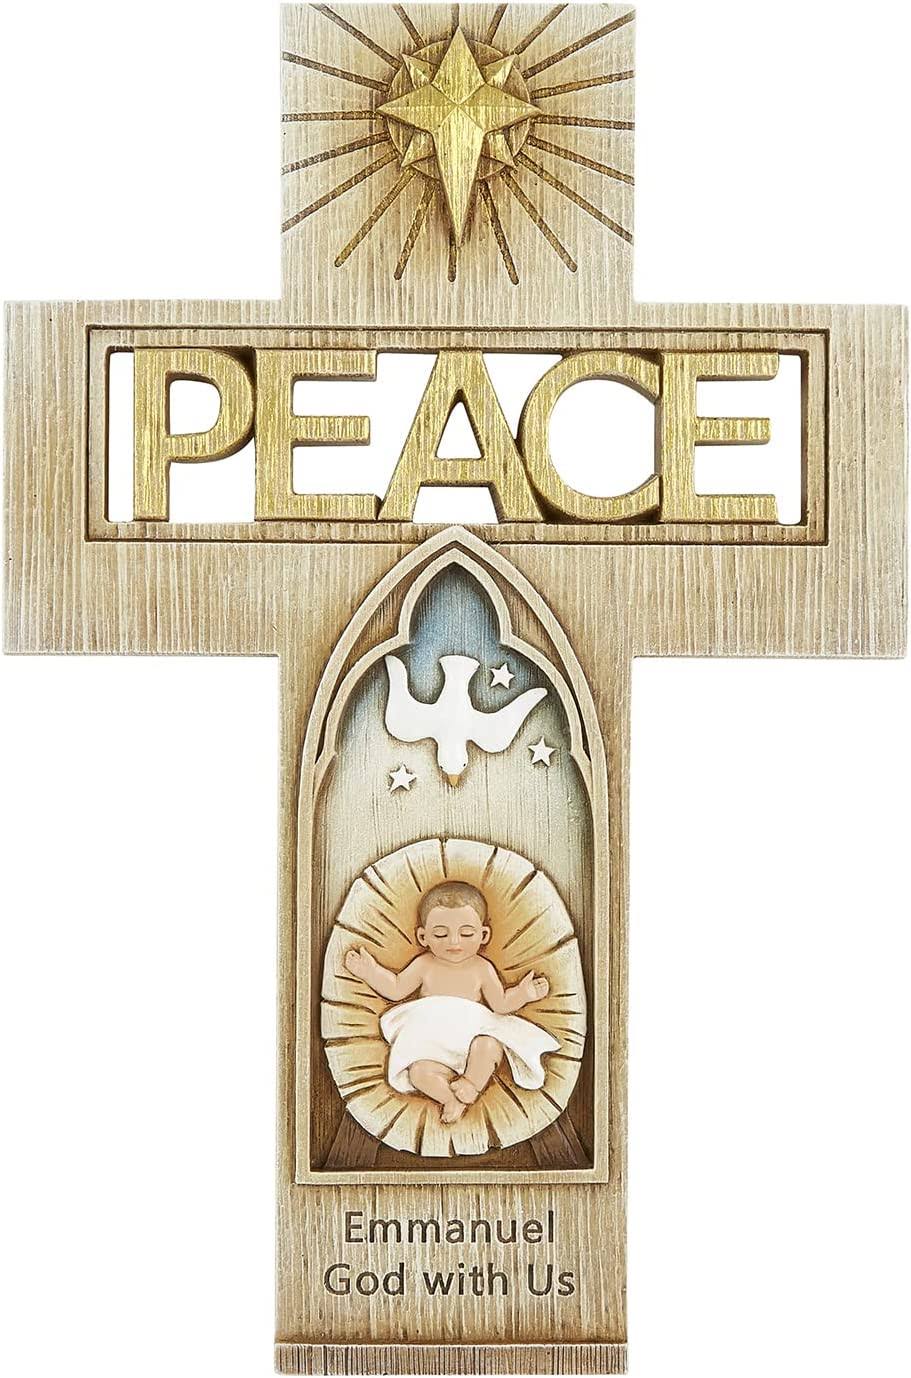 Christian Brands G4774 Peace Cross